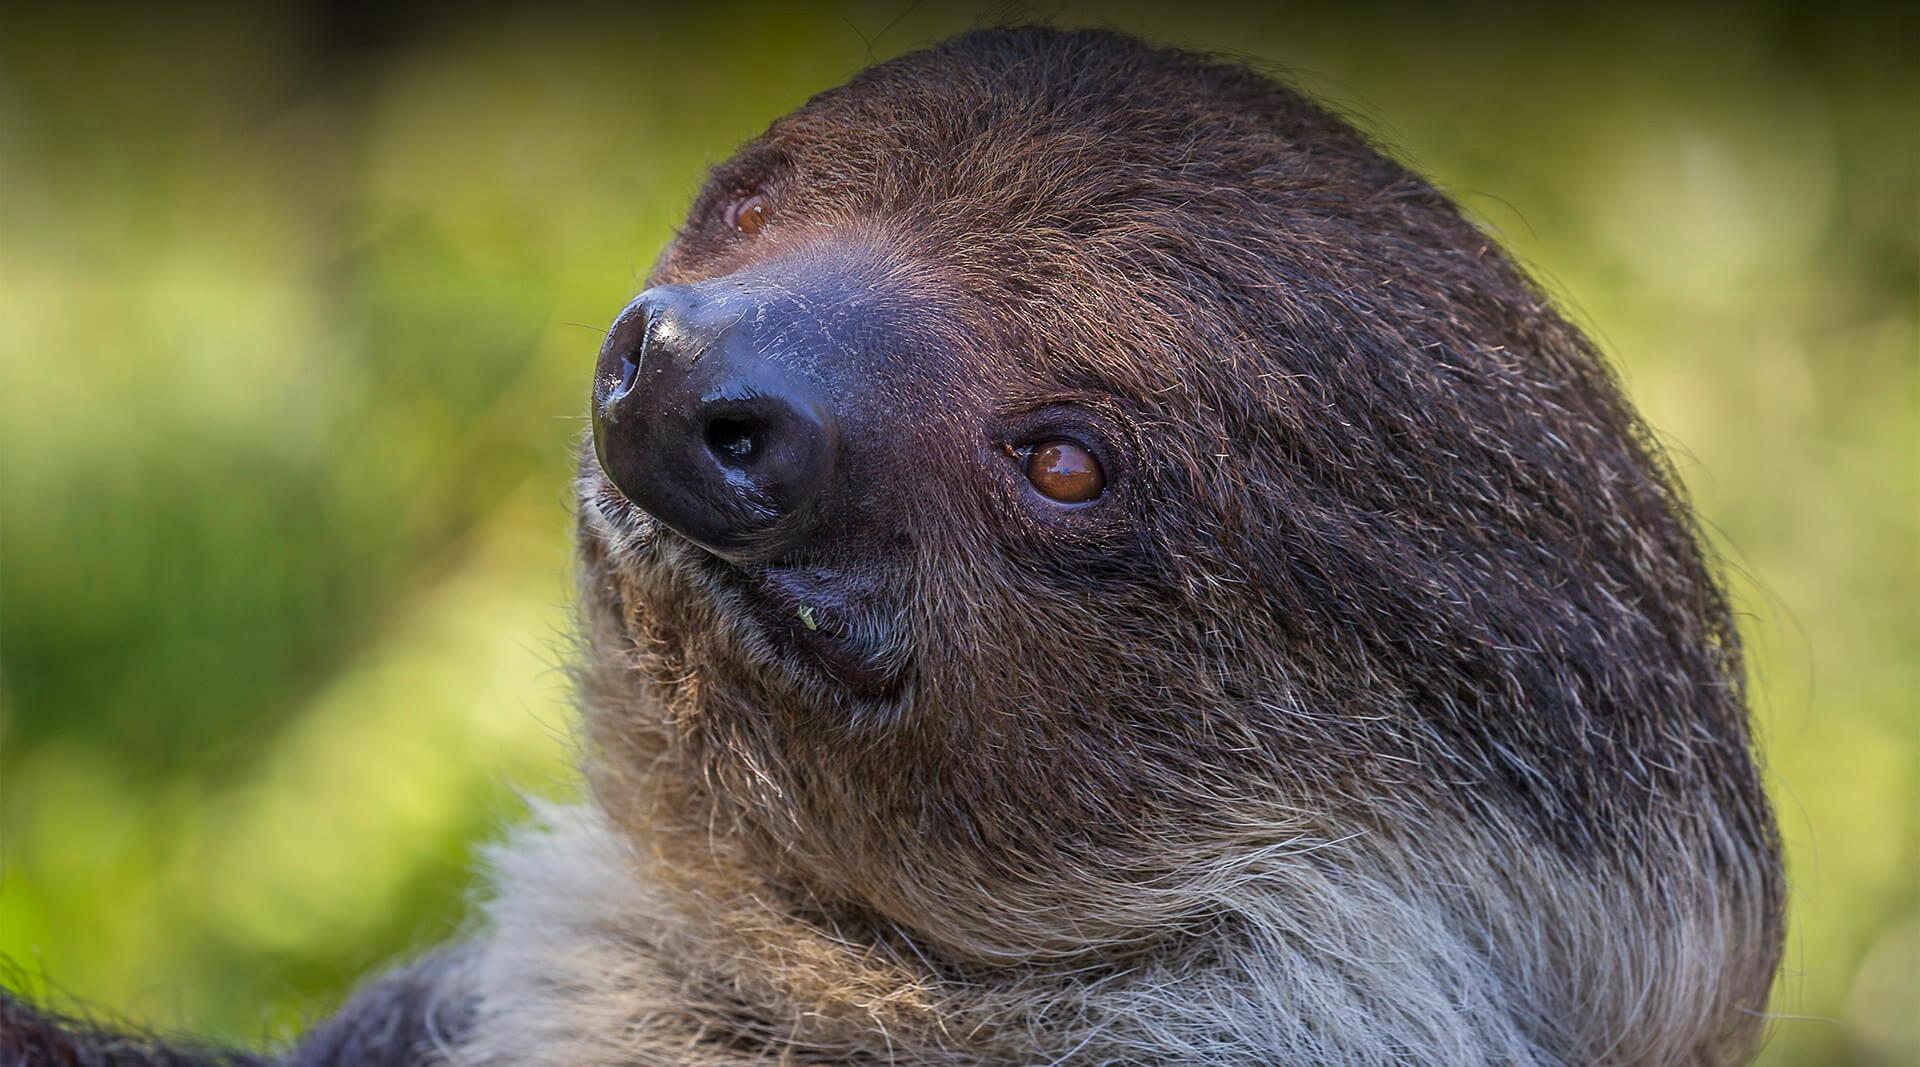 sloth head looks at camera